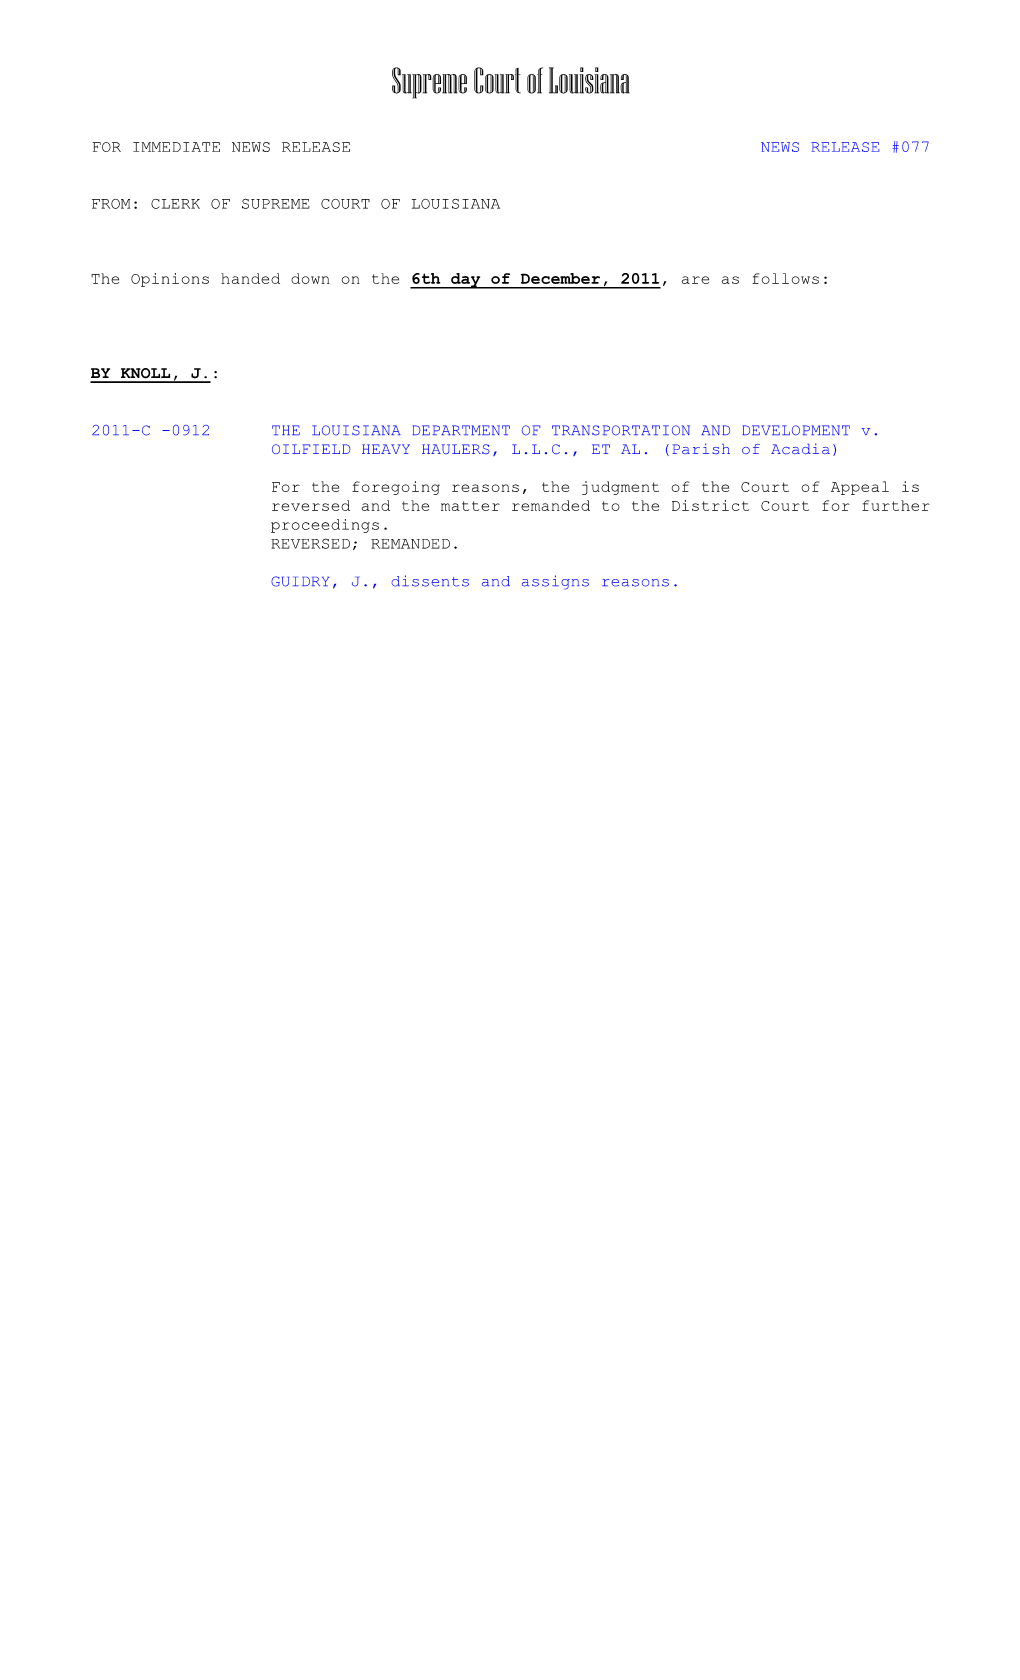 2011-C -0912 the LOUISIANA DEPARTMENT of TRANSPORTATION and DEVELOPMENT V. OILFIELD HEAVY HAULERS, L.L.C., ET AL